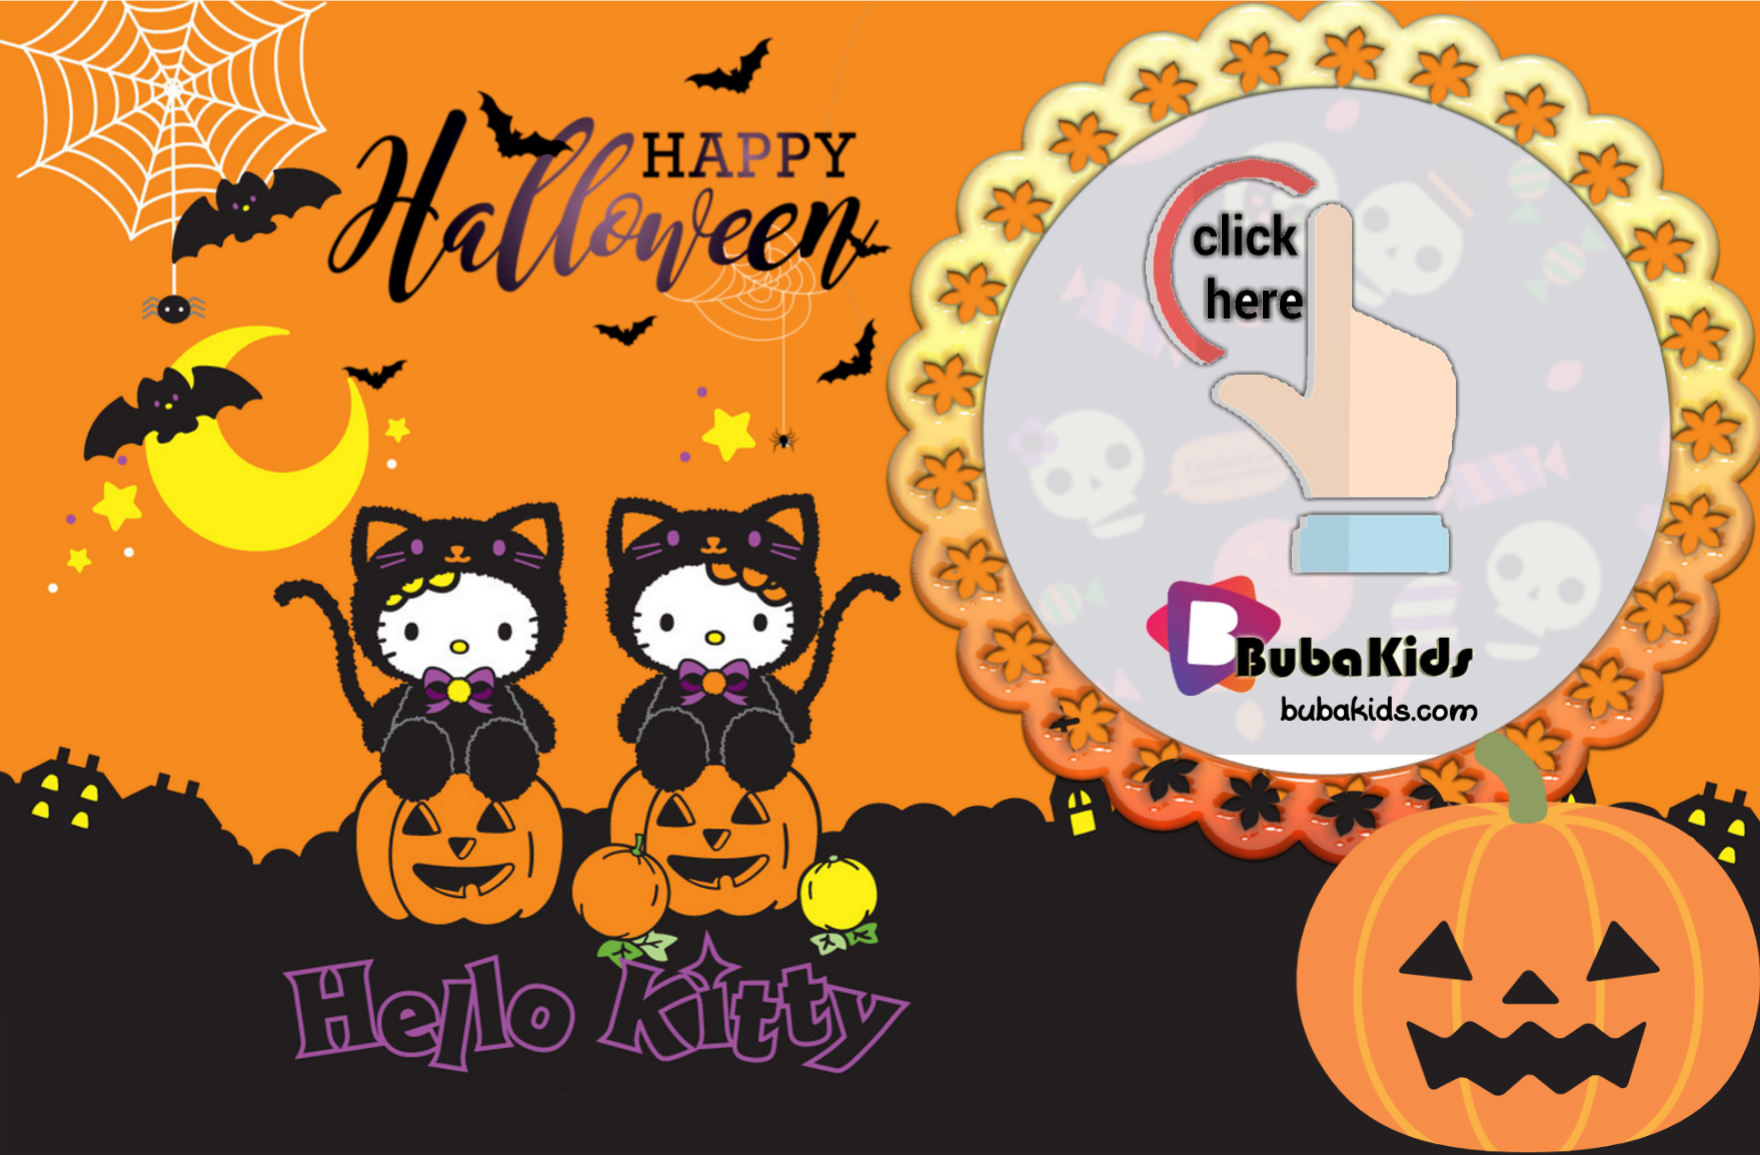 Hello Kitty halloween party invitation free and printable. Wallpaper